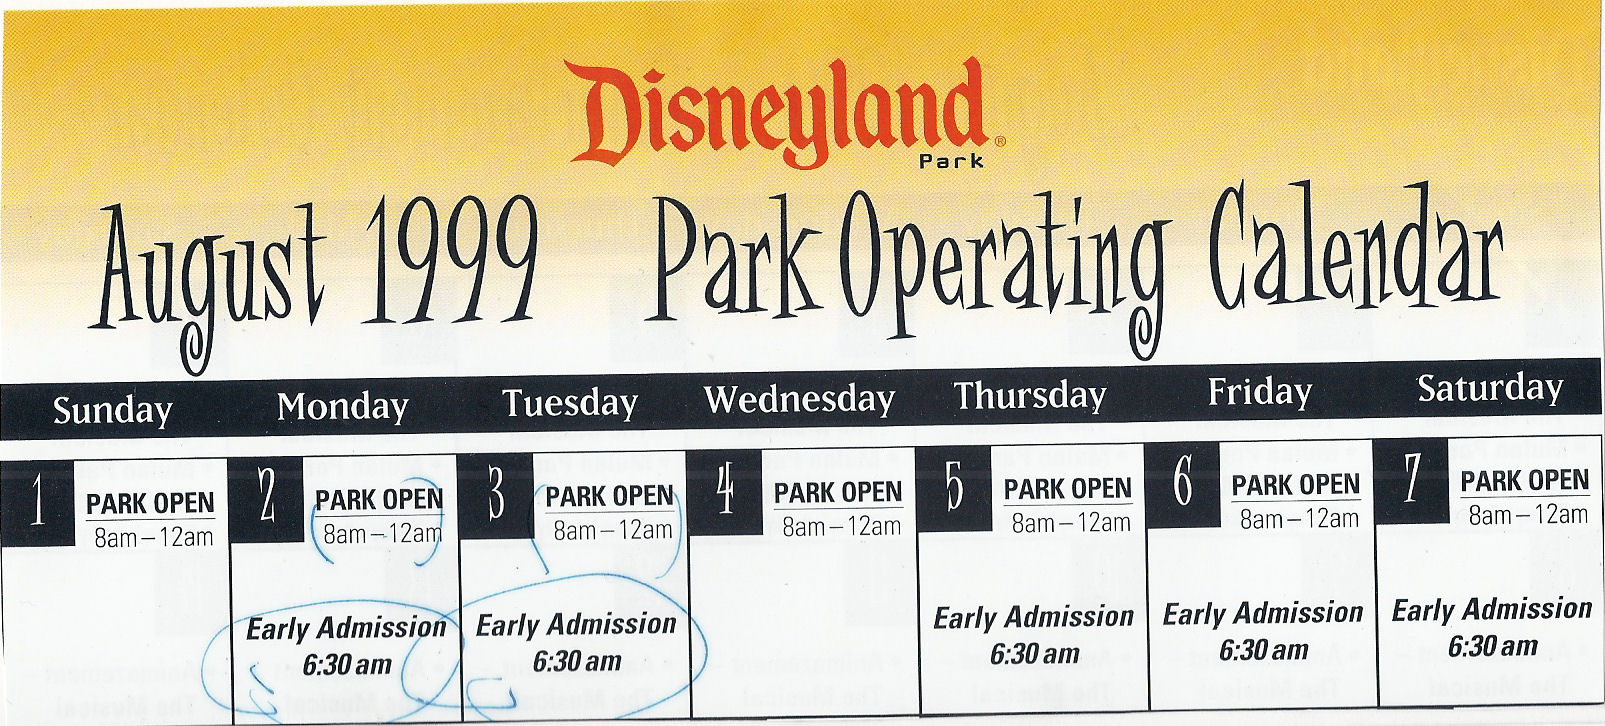 A Disneyland operating calendar.